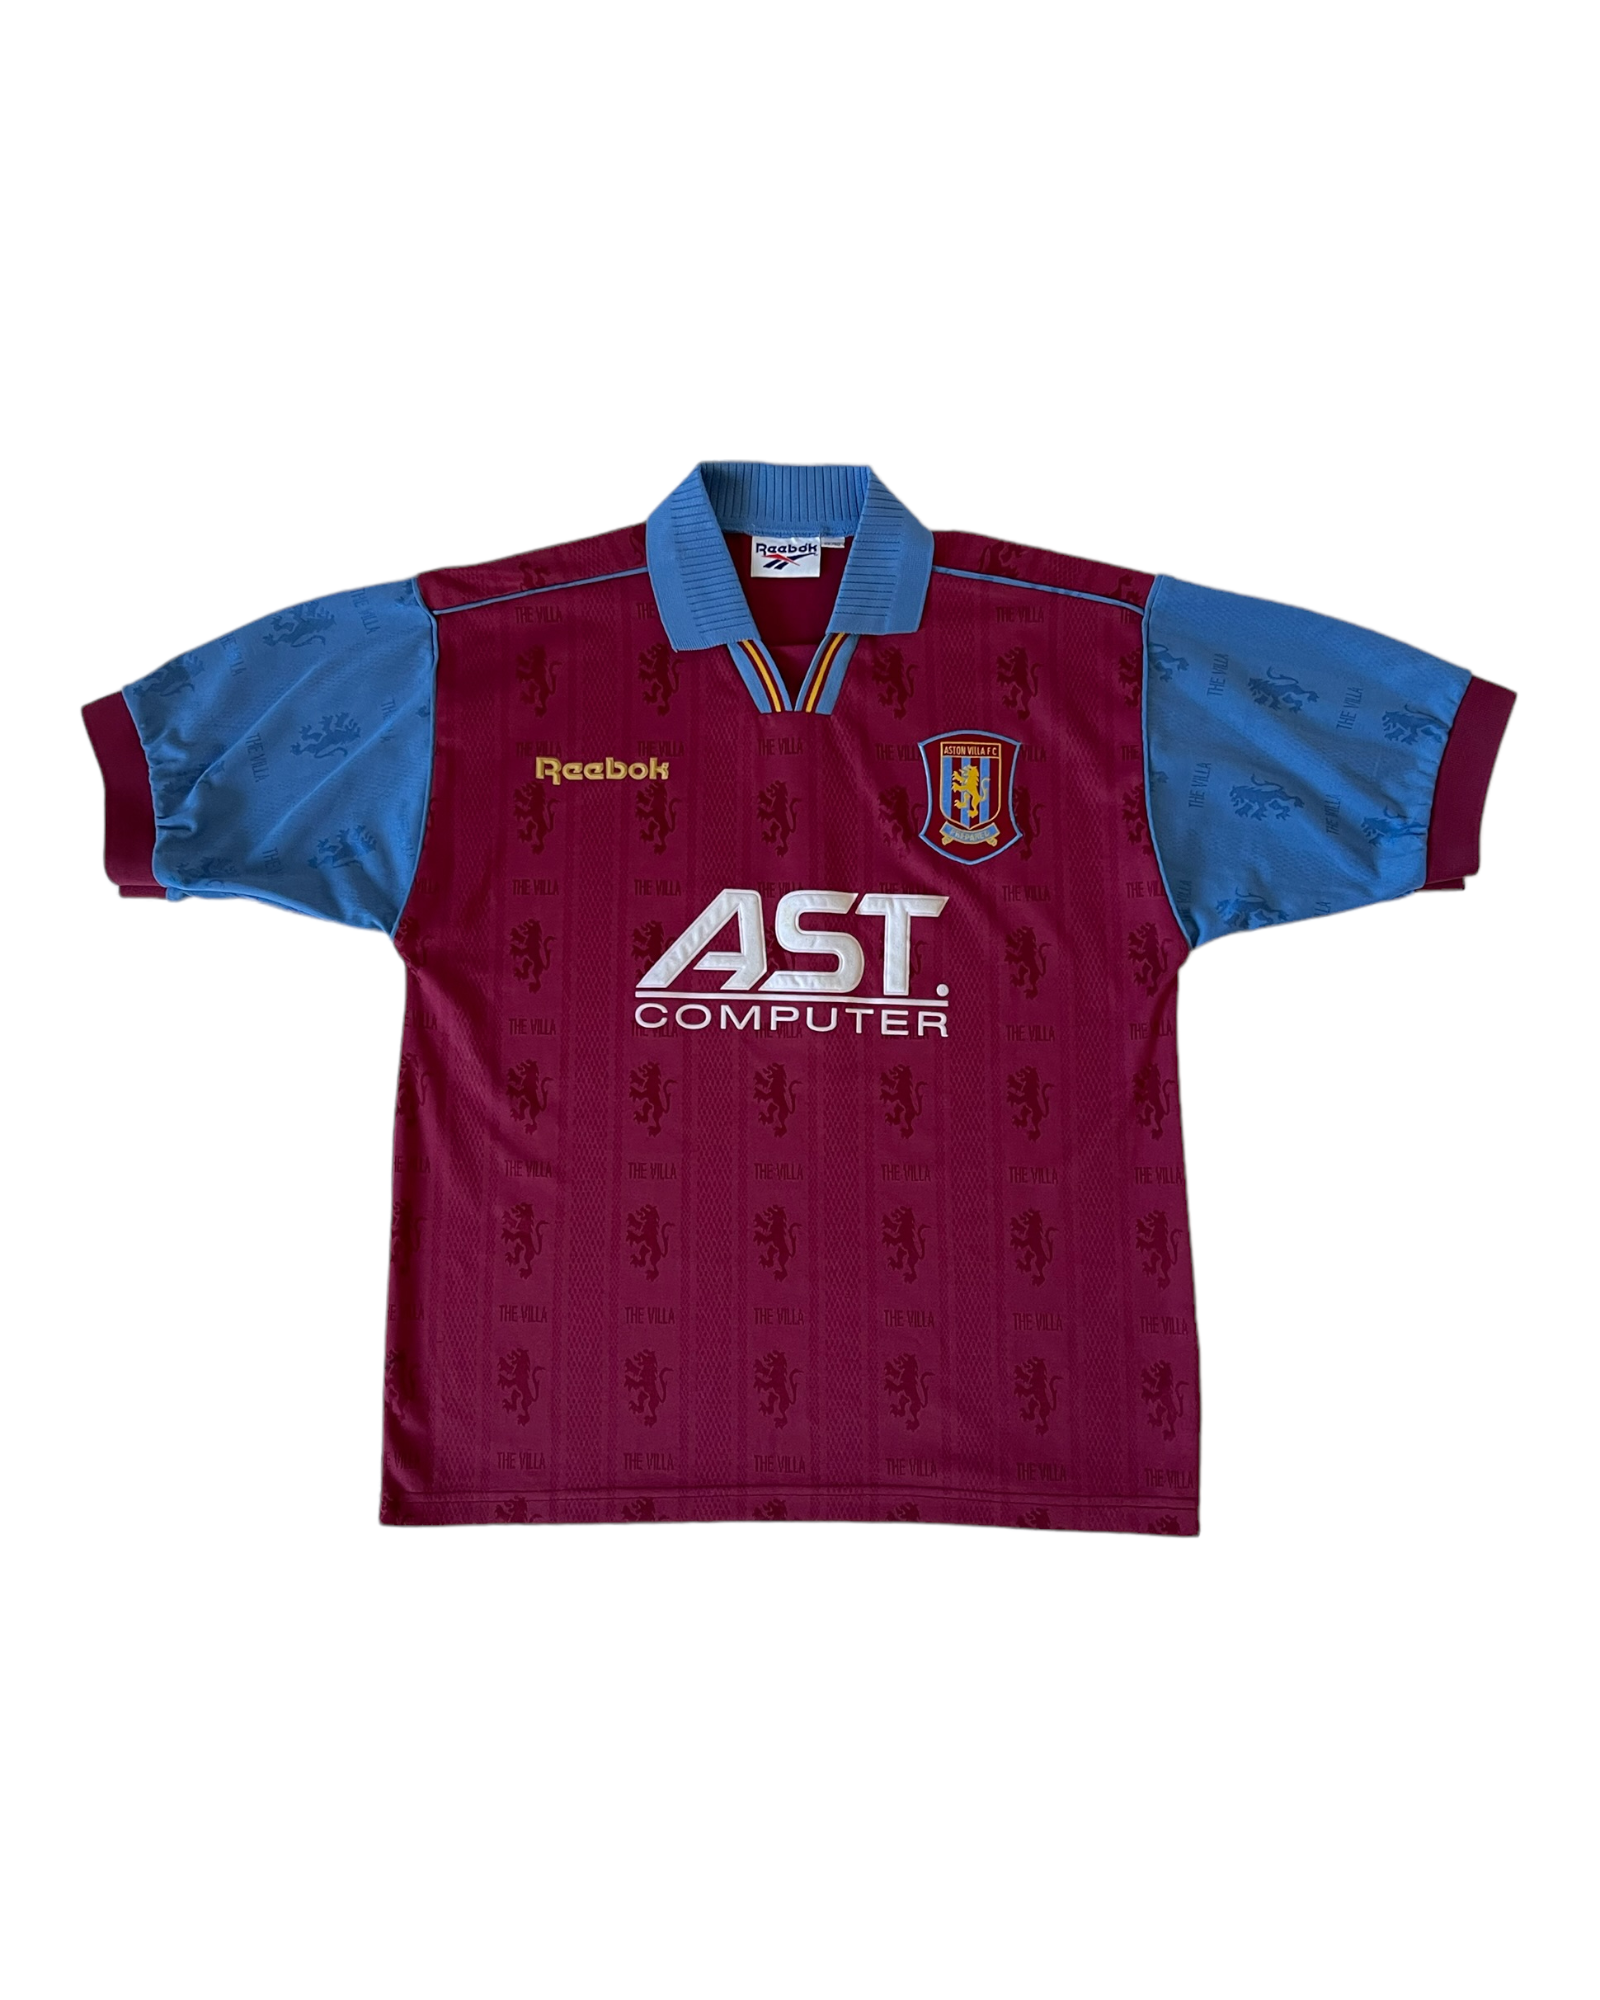 Vintage Aston Villa Reebok 1995-1996 Home Football Shirt Red Blue AST Computer Size M